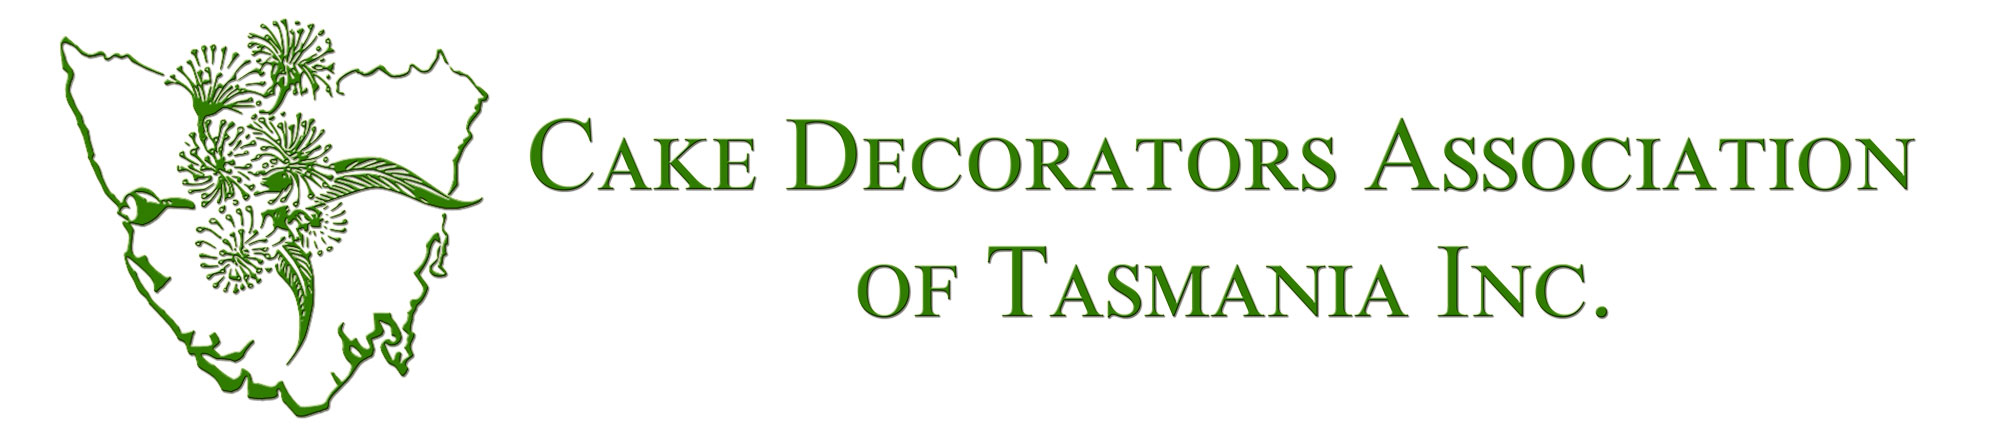 Cake Decorators Association of Tasmania Inc Logo